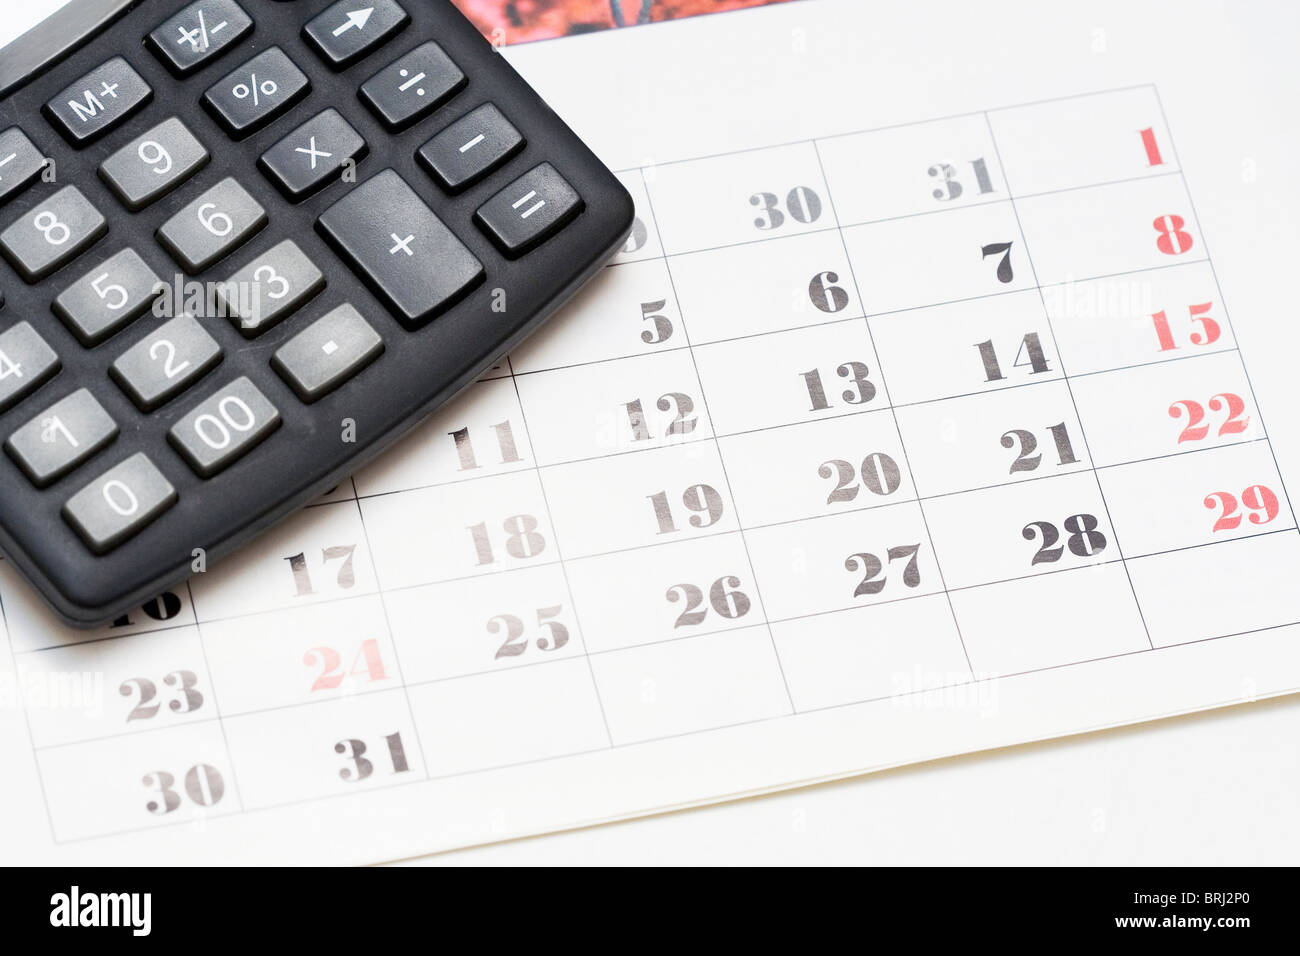 calculator-on-calendar-days-left-calculation-concept-credit-stock